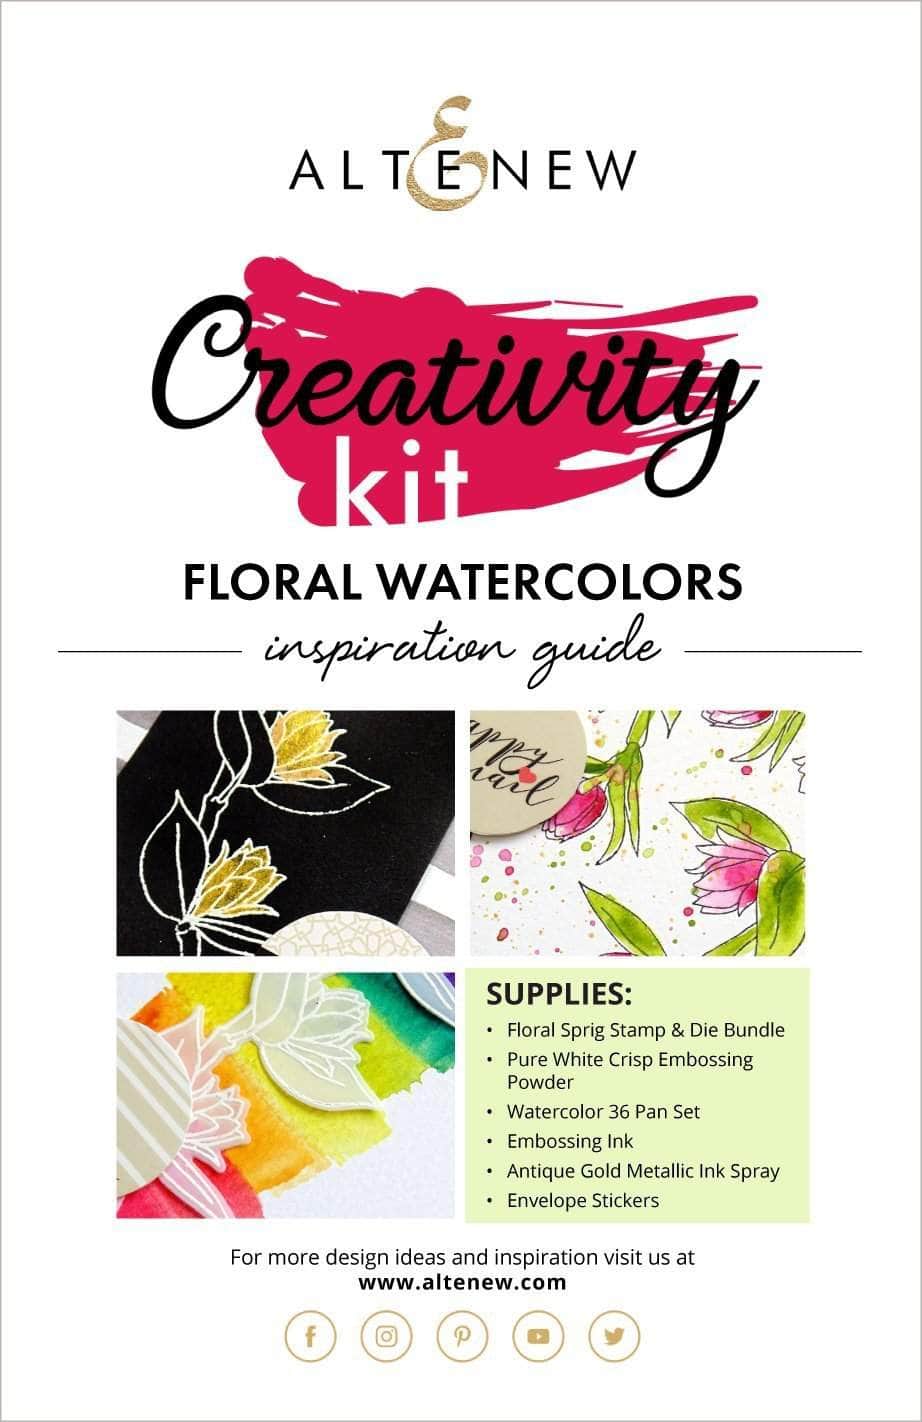 Printed Media Floral Watercolors Creativity Kit Inspiration Guide